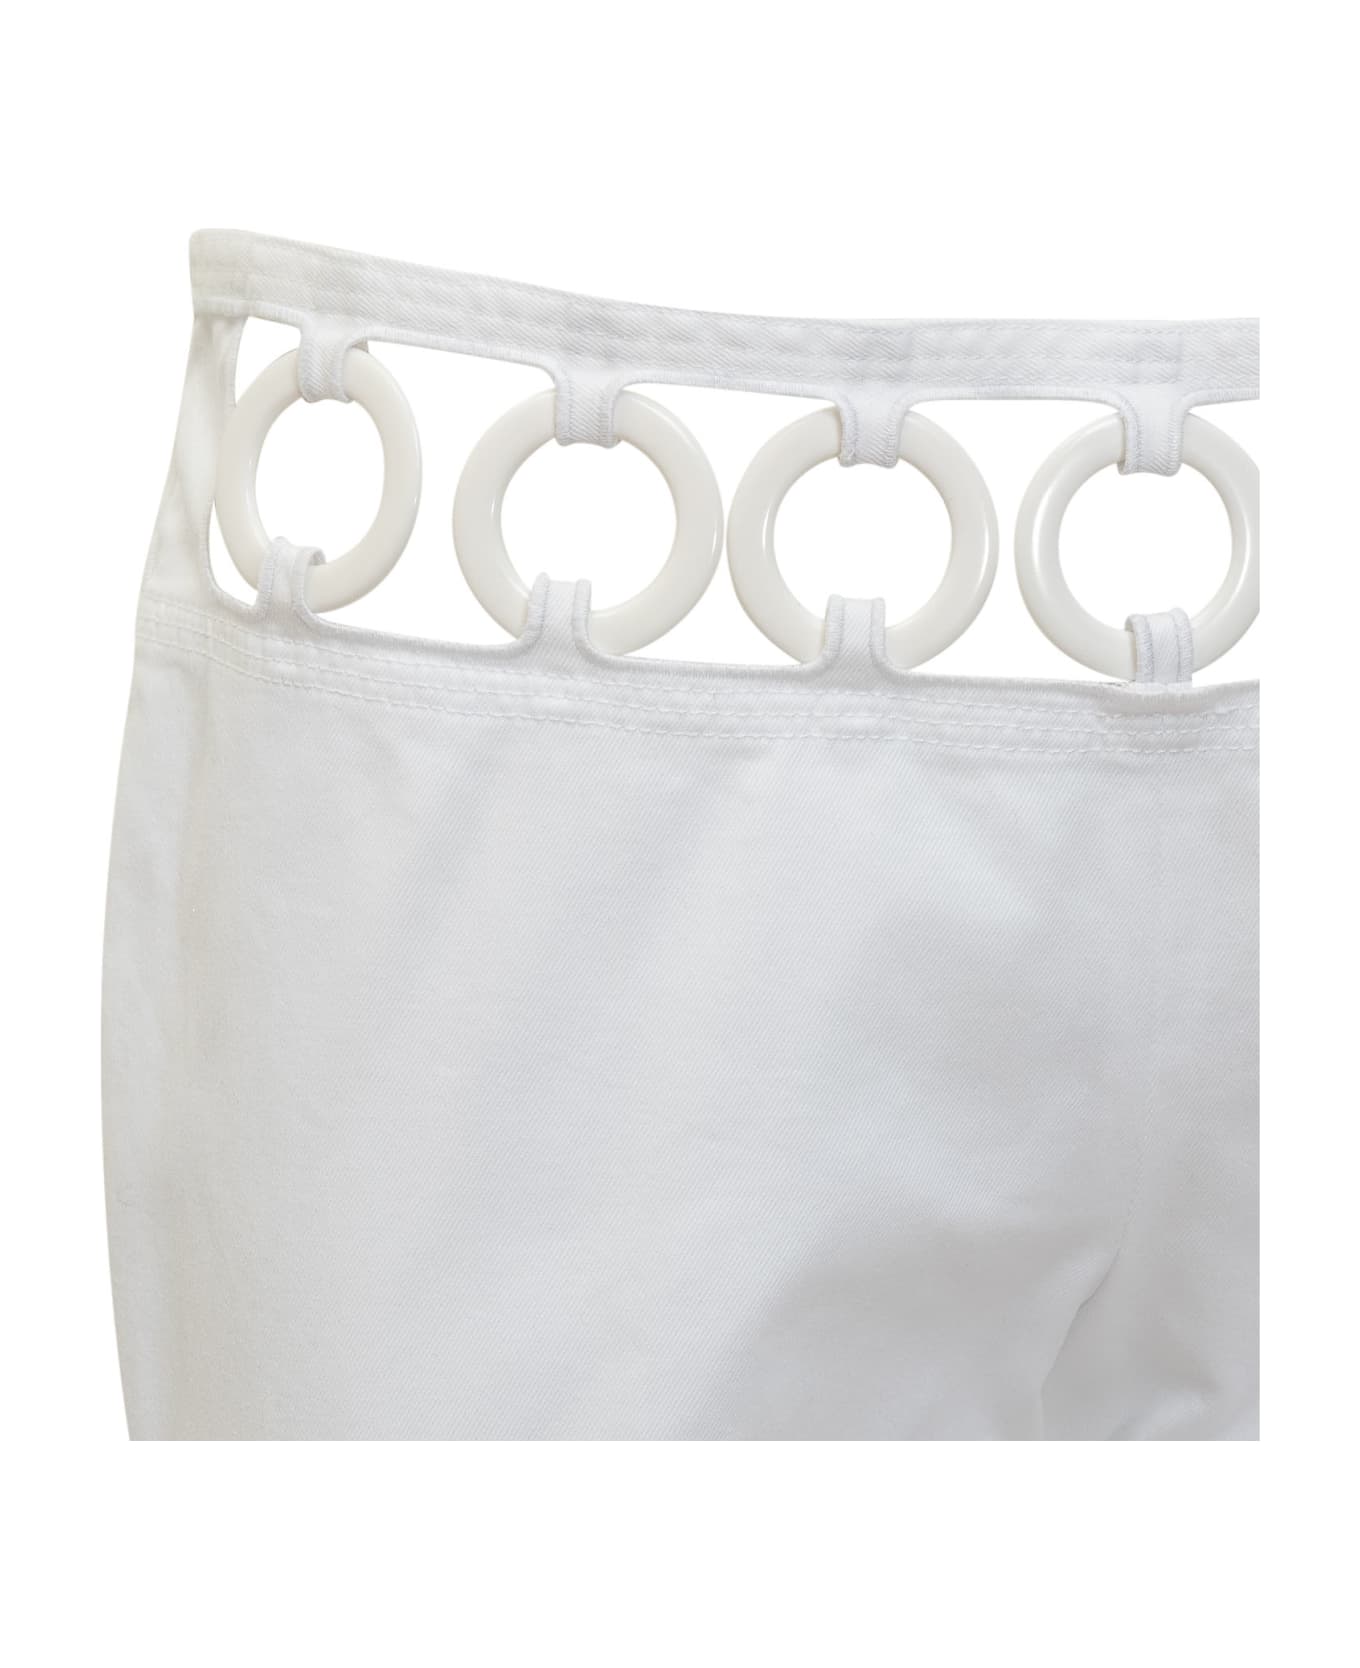 Dsquared2 Trouser - WHITE